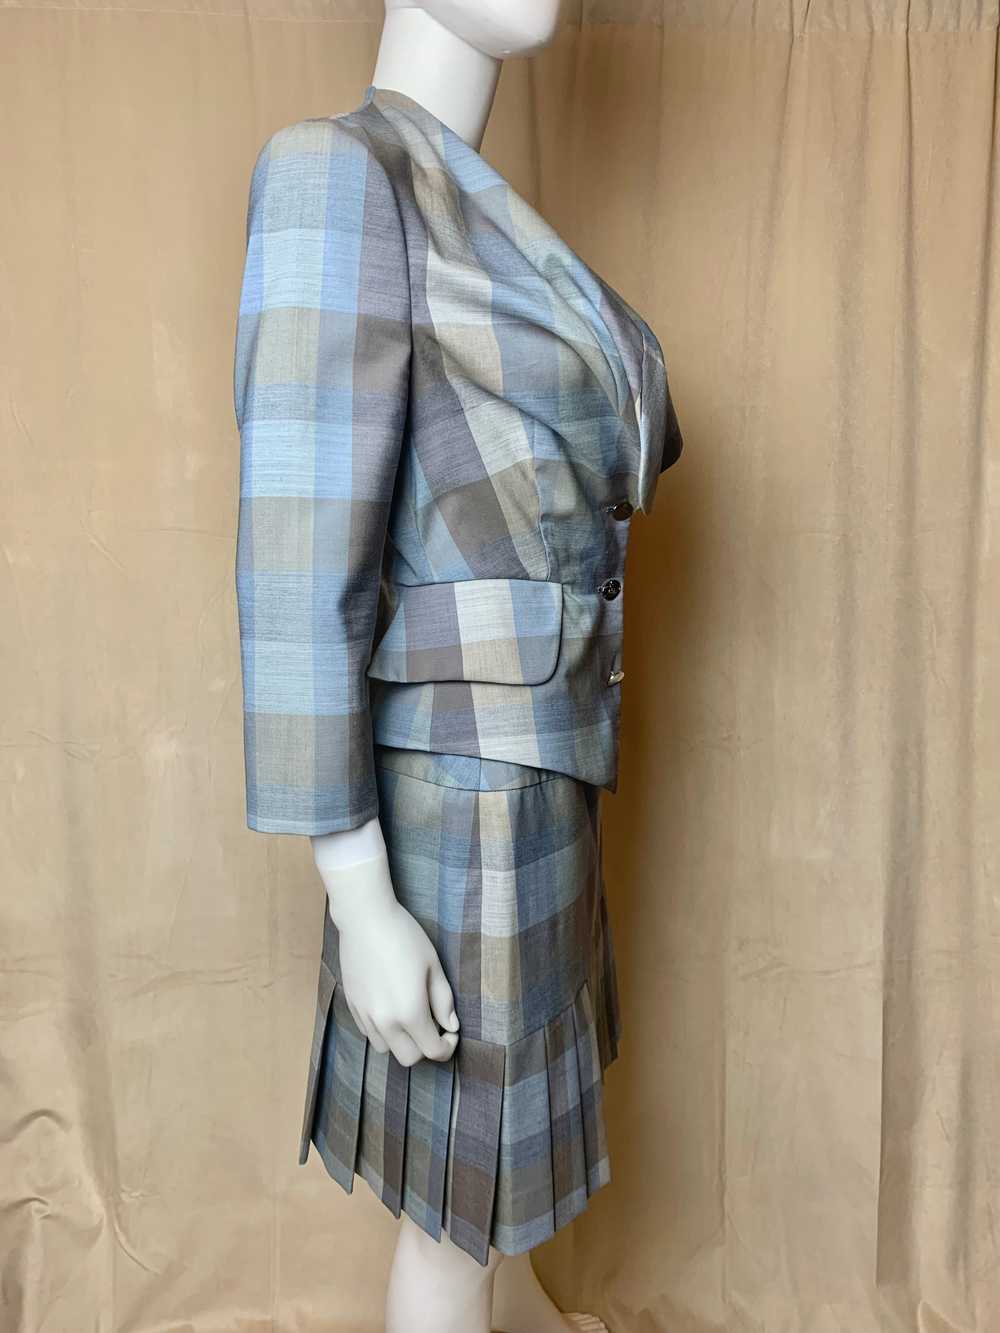 Vivienne Westwood SS 2013 Skirt Suit - image 11